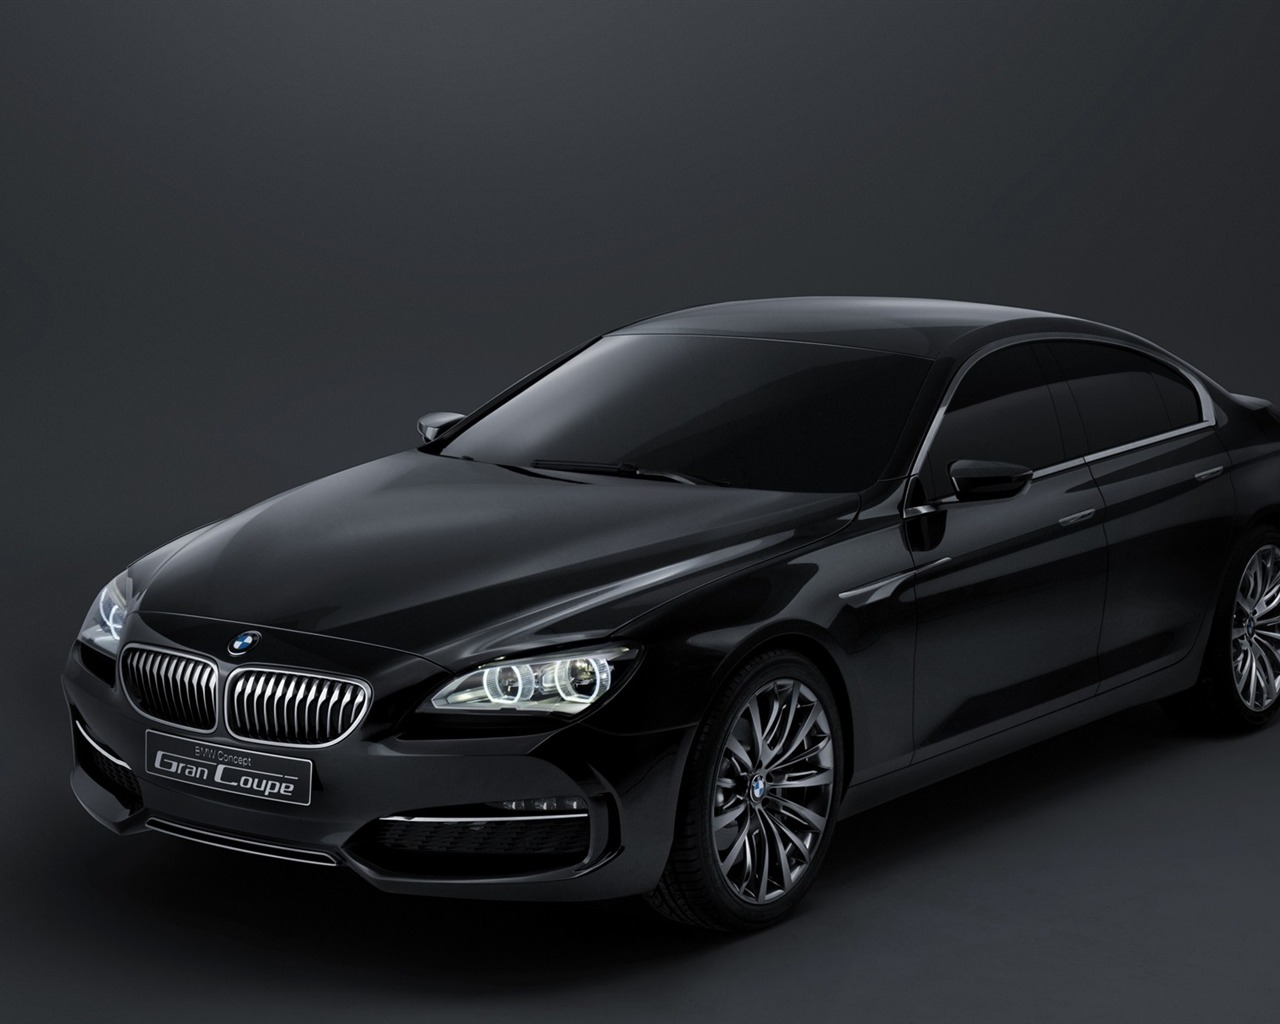 Fond d'écran BMW concept-car (1) #18 - 1280x1024